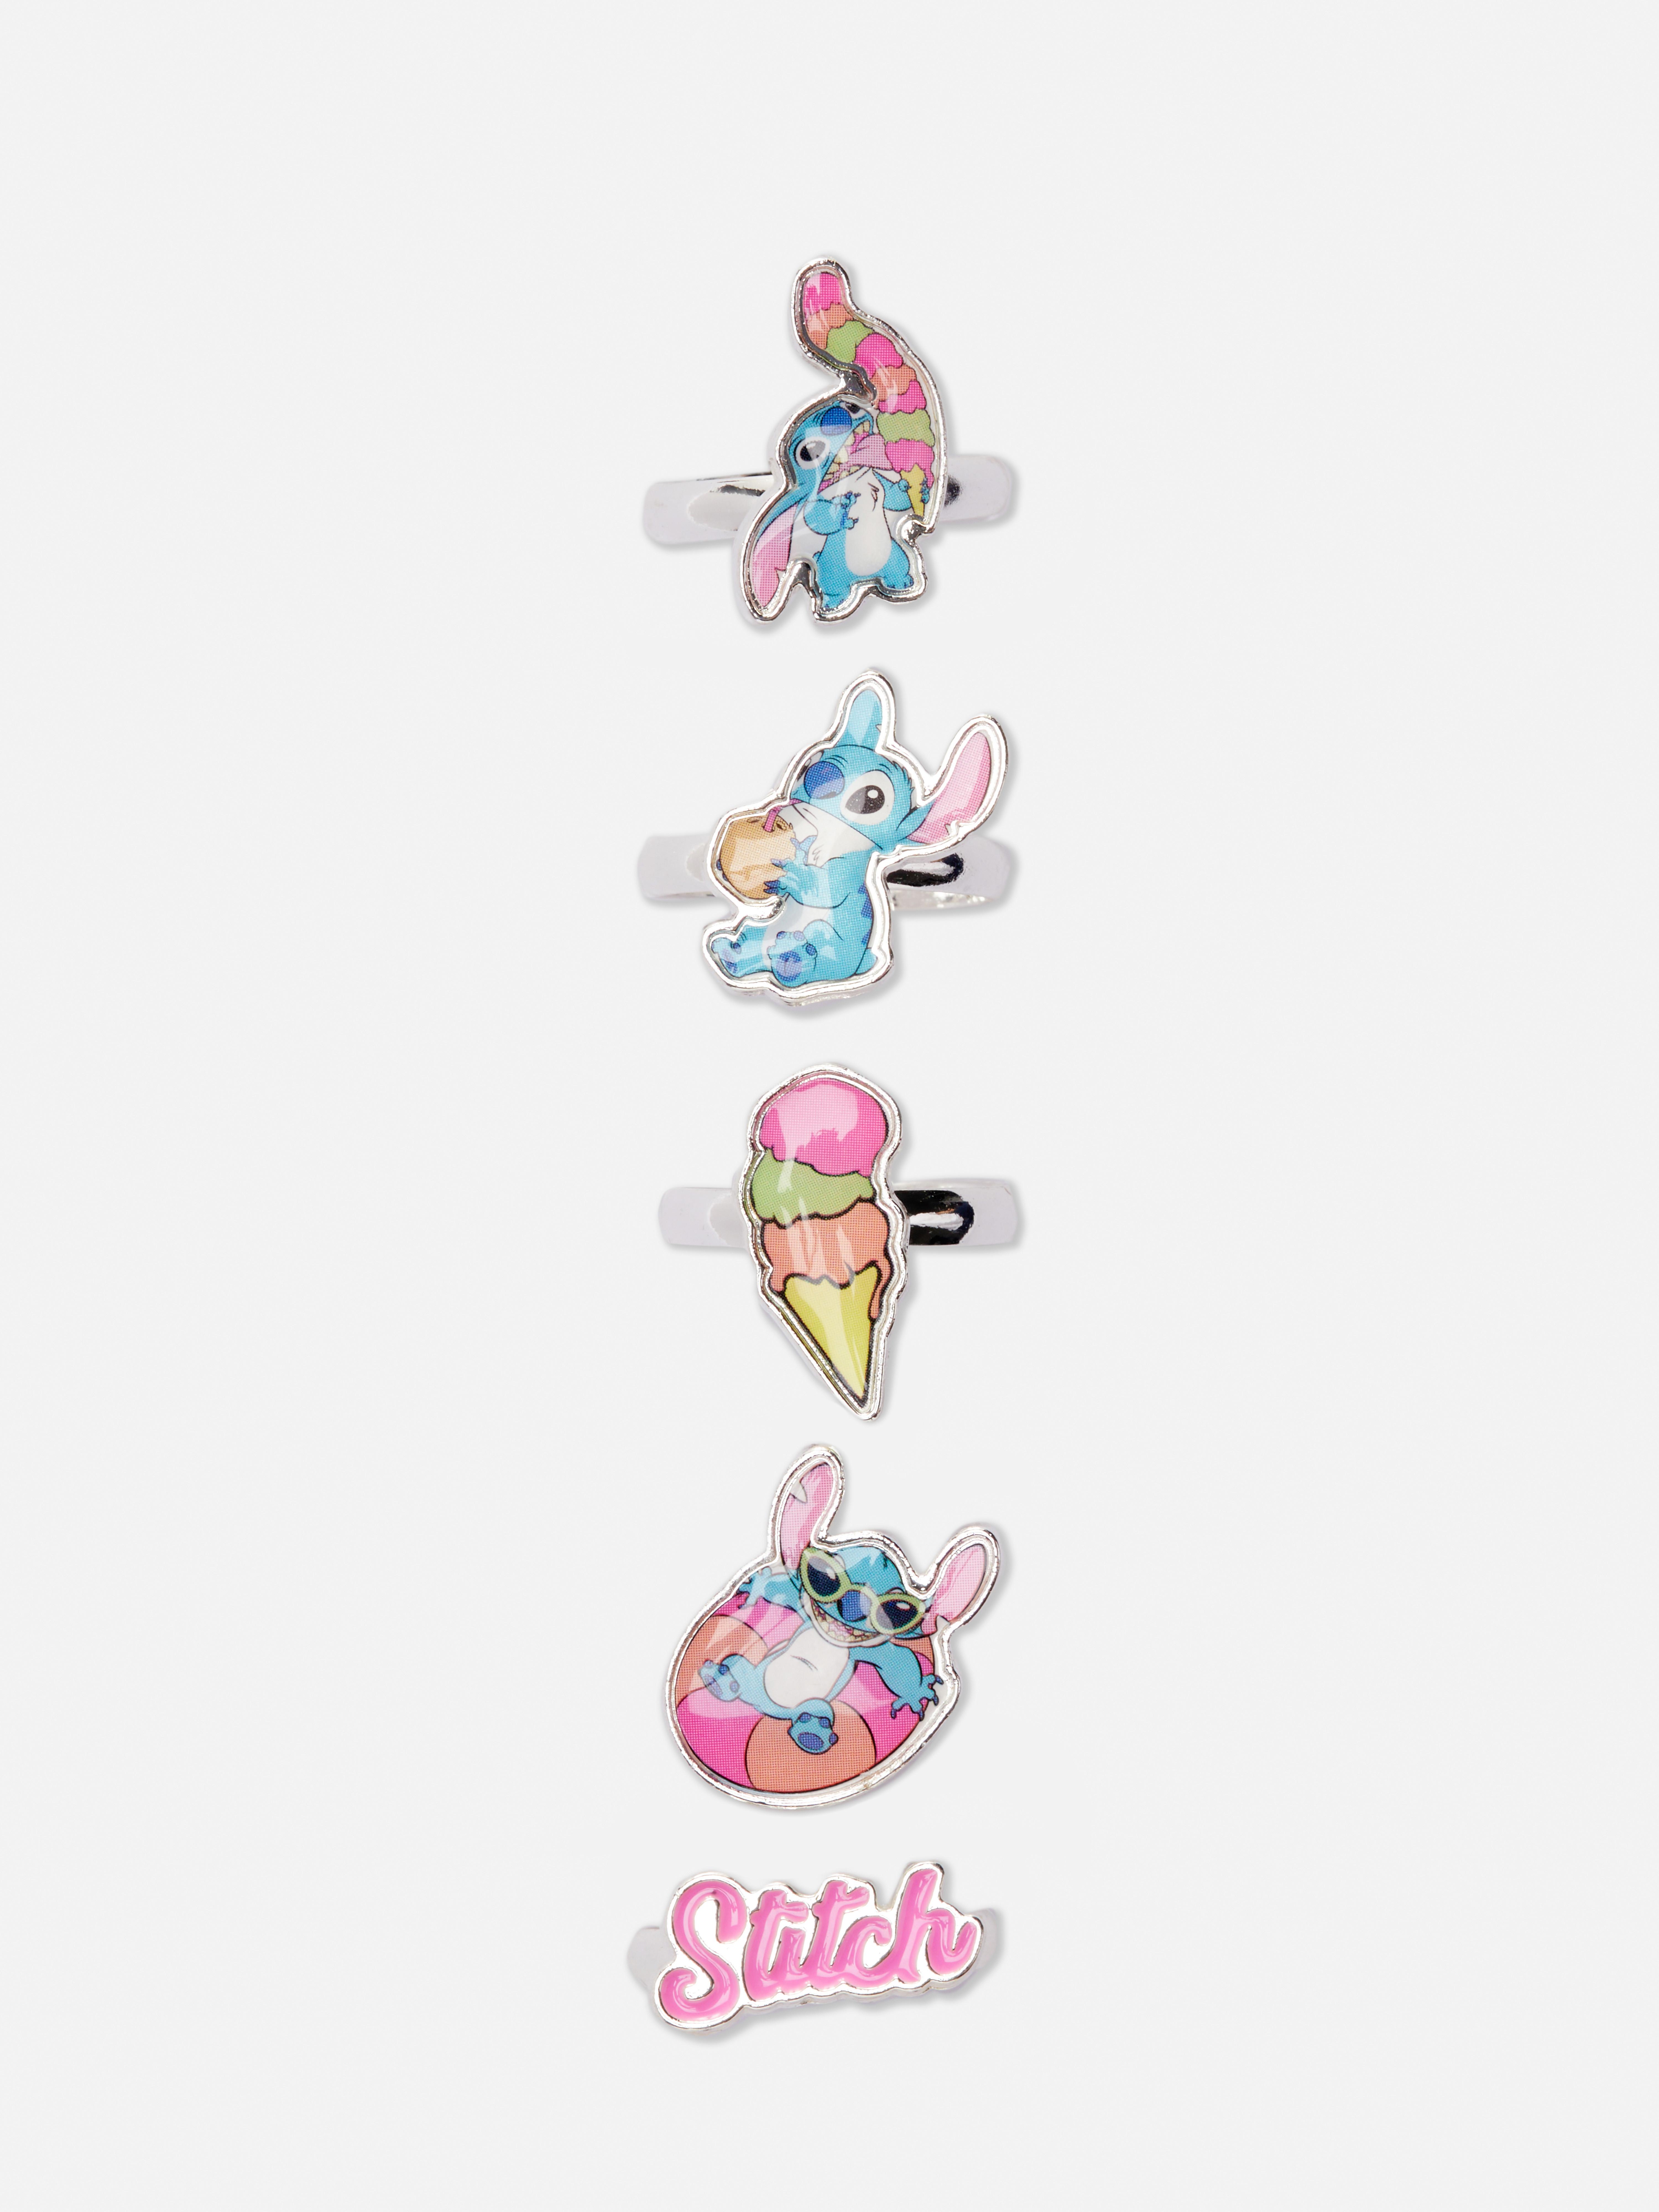 Pack de 5 anillos de Stitch con personajes de Disney